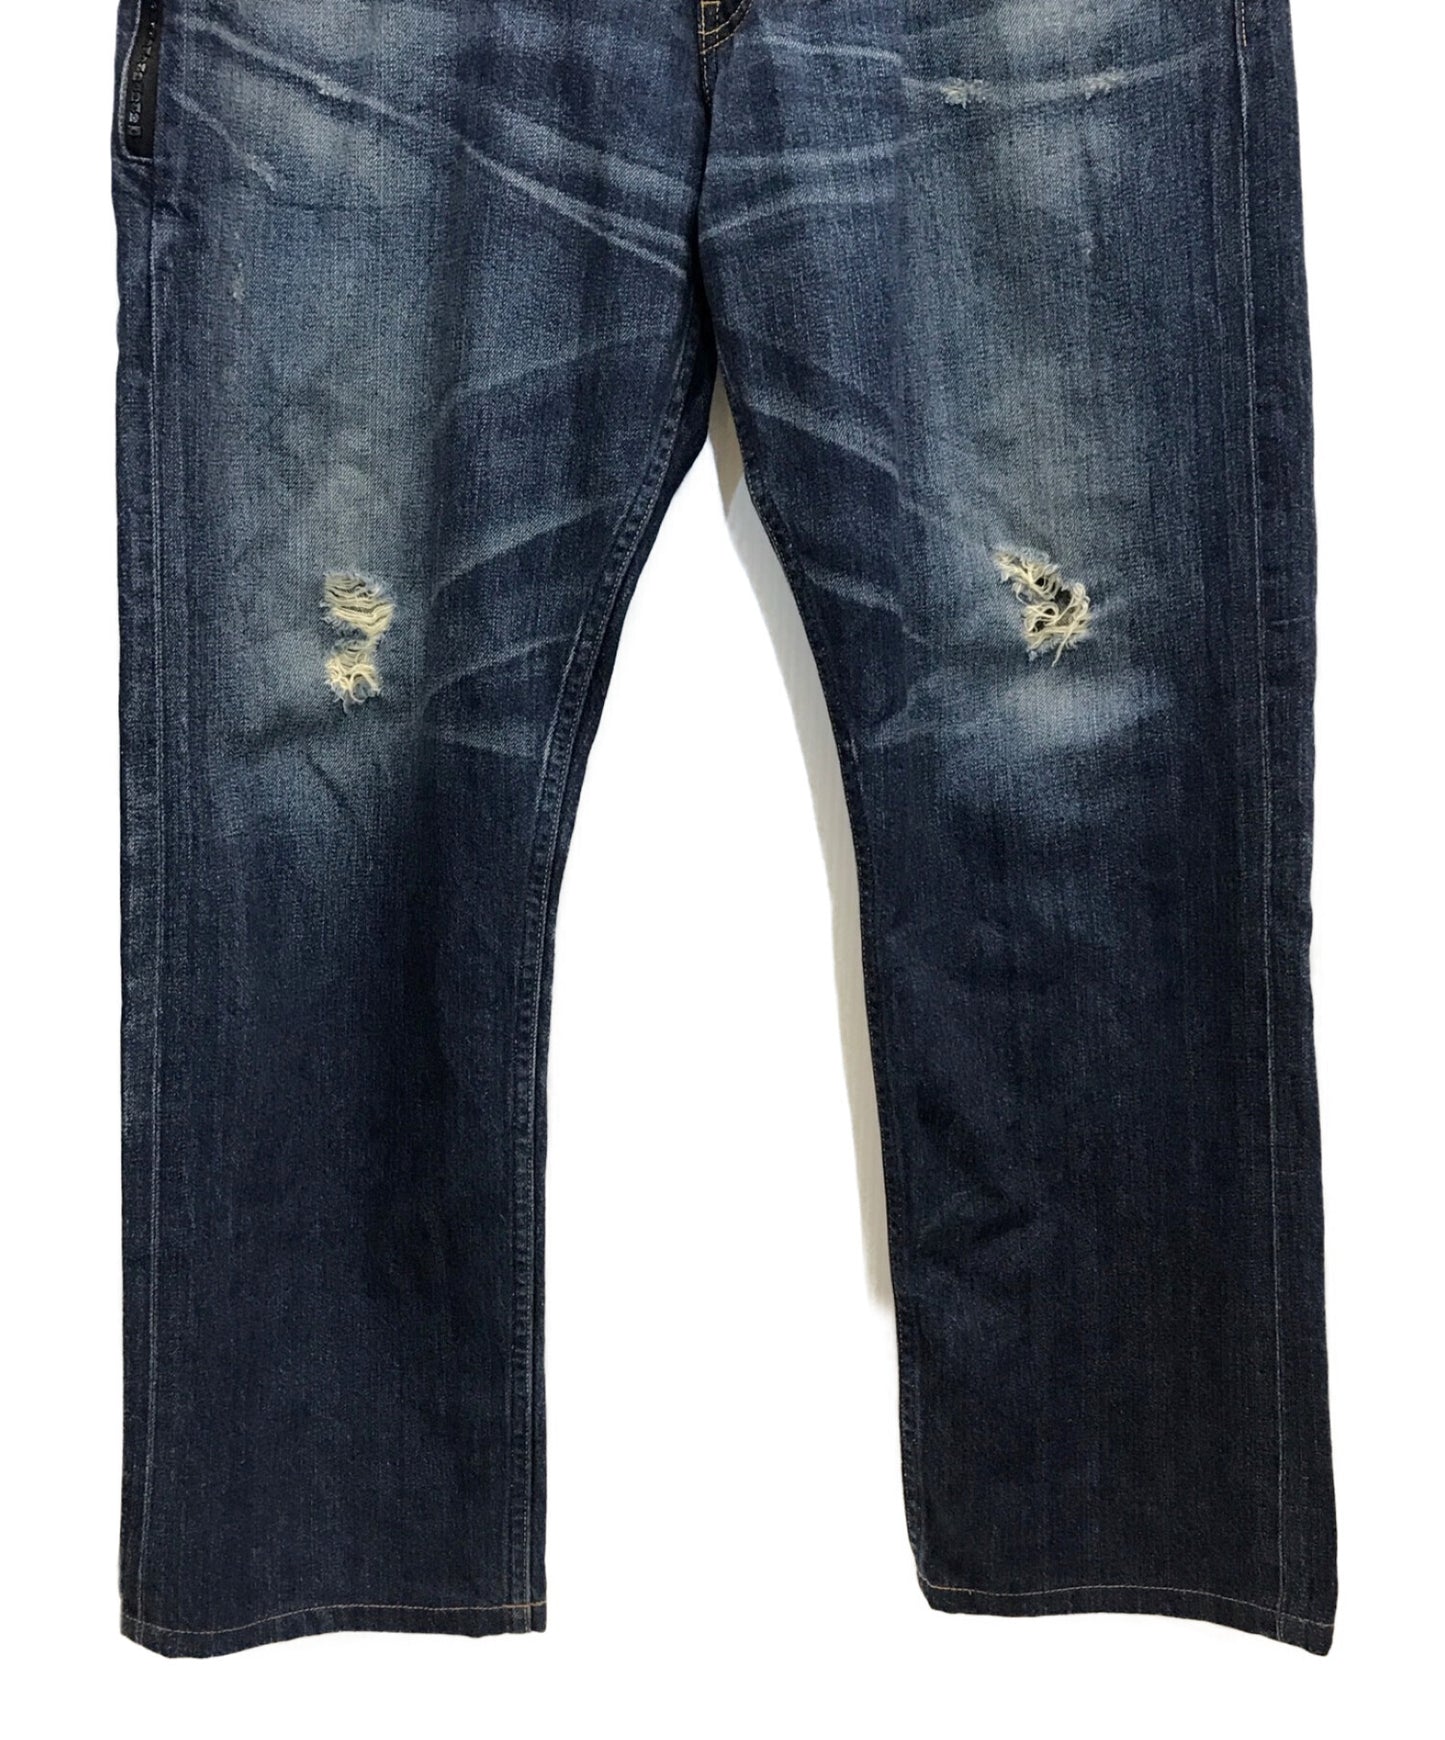 Levi's Fenom特别订单505繁忙的螺柱牛仔裤UE505-0002